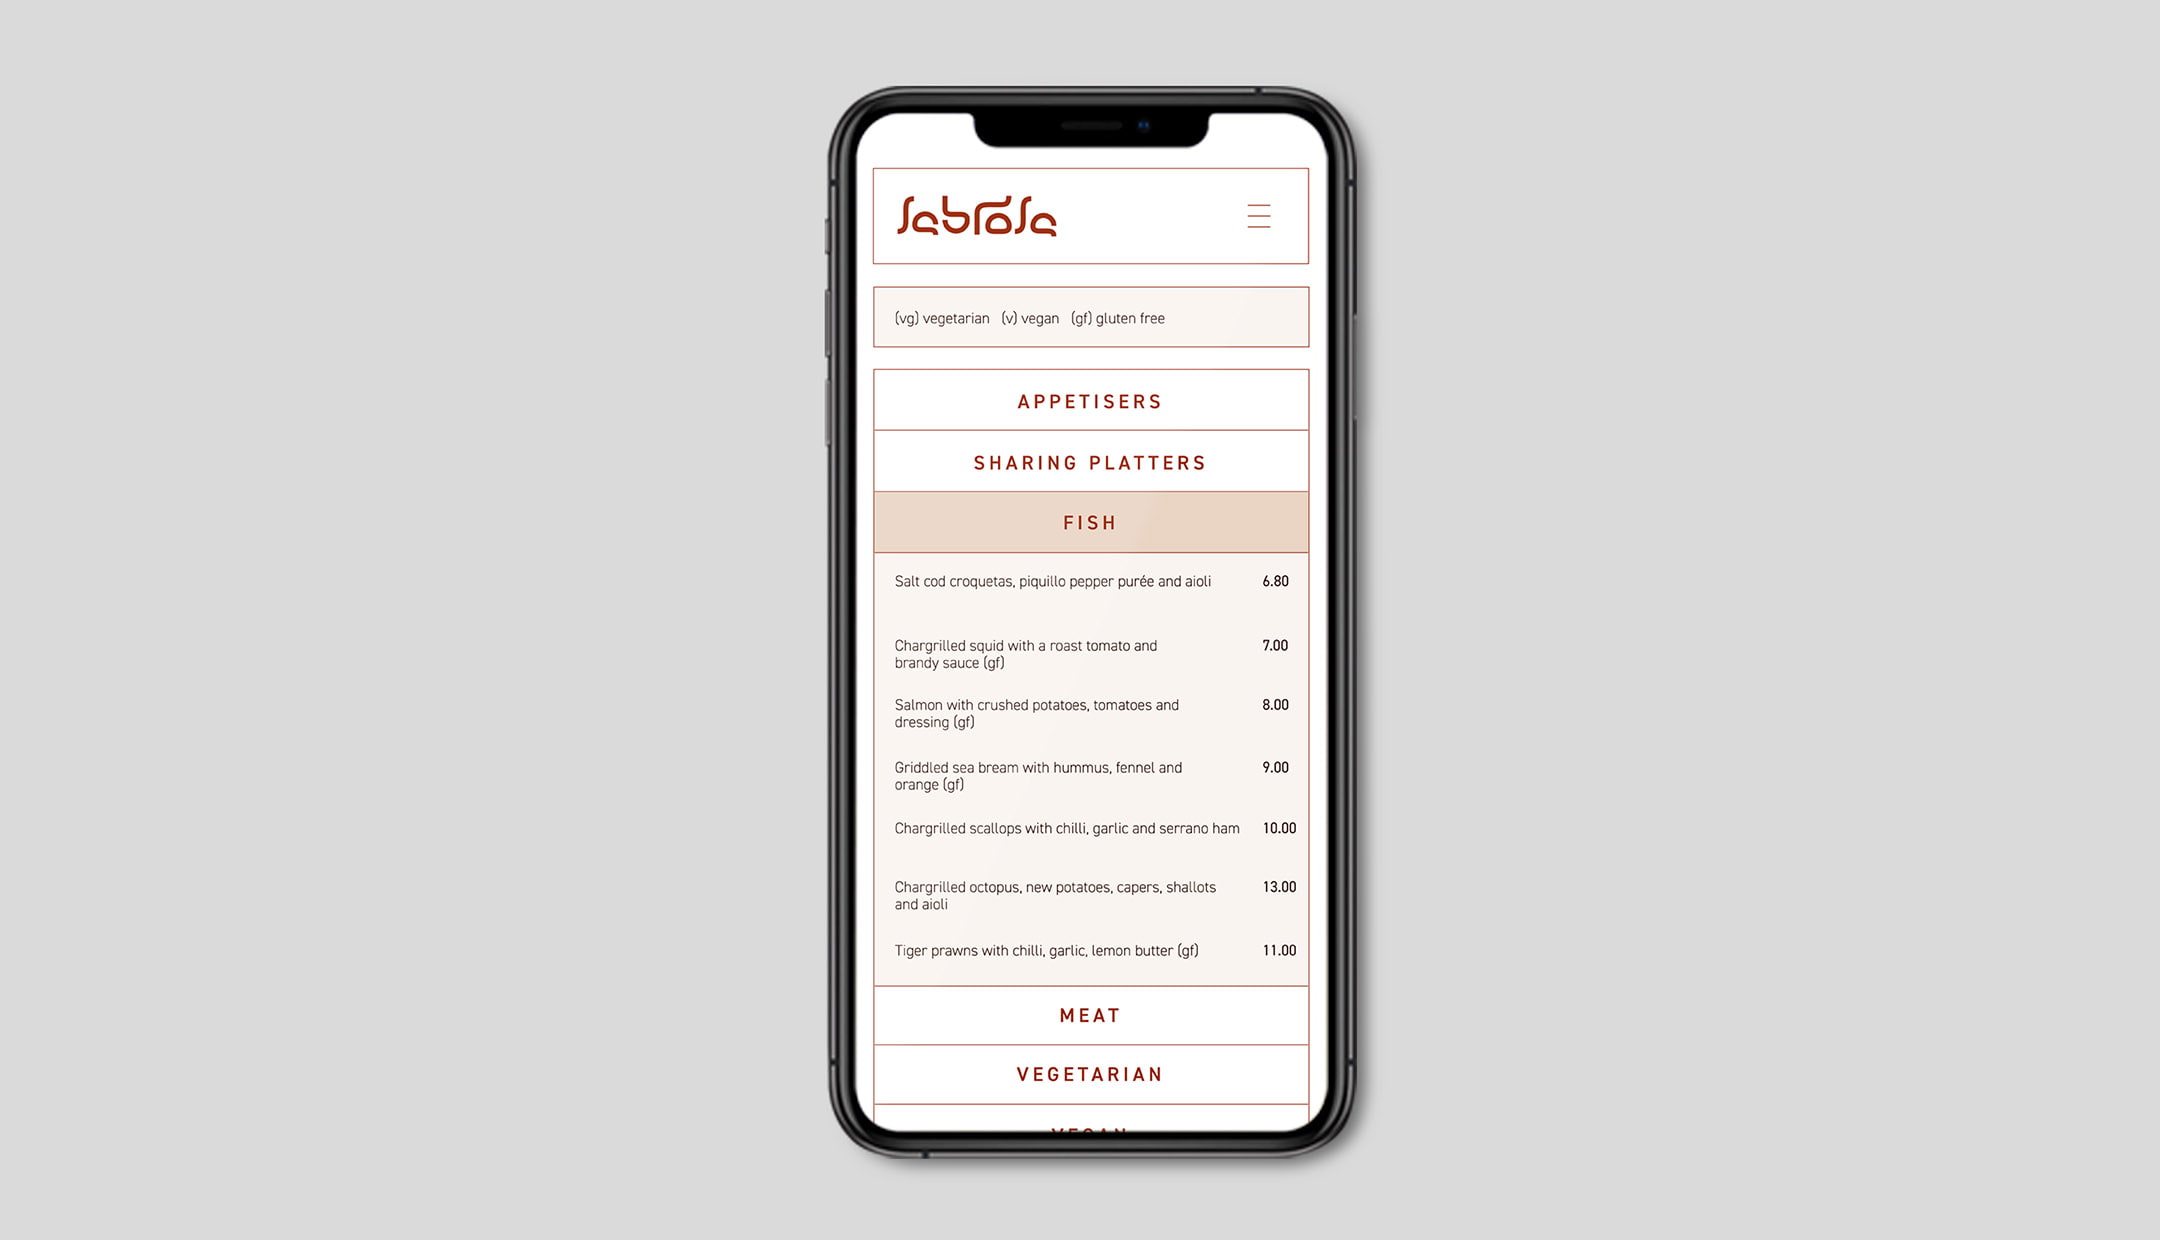 Sabrosa website menu responsively on iPhone